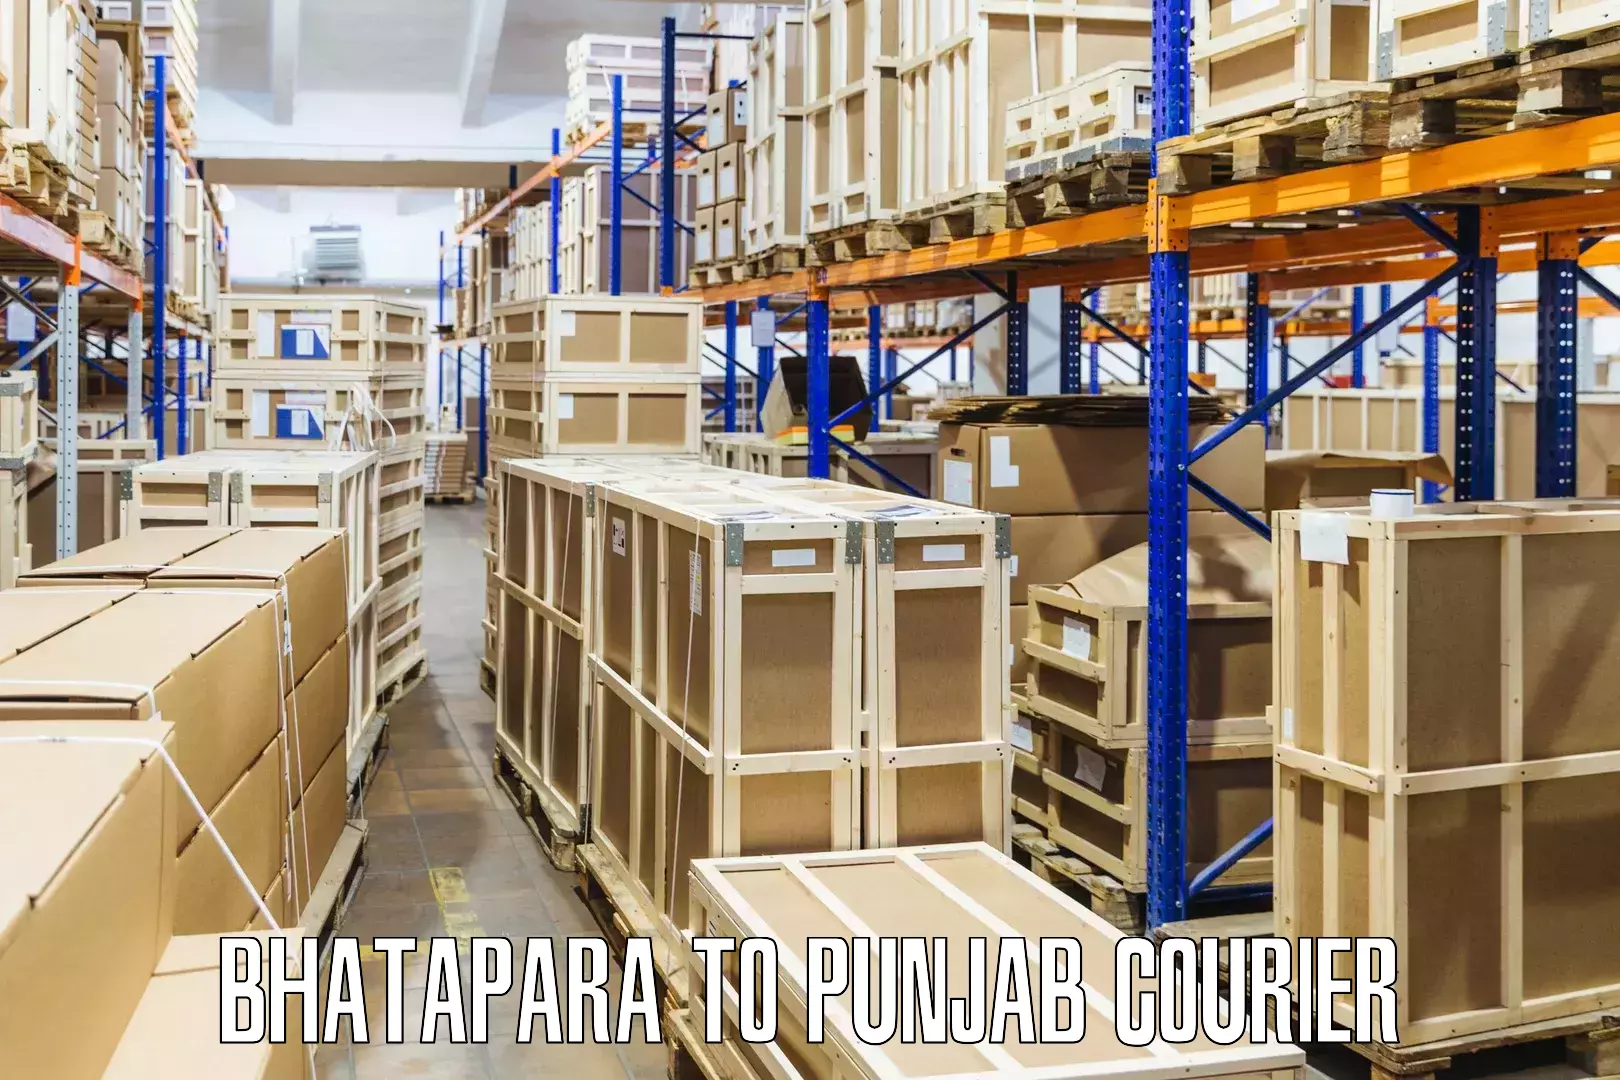 Courier service comparison Bhatapara to Nakodar